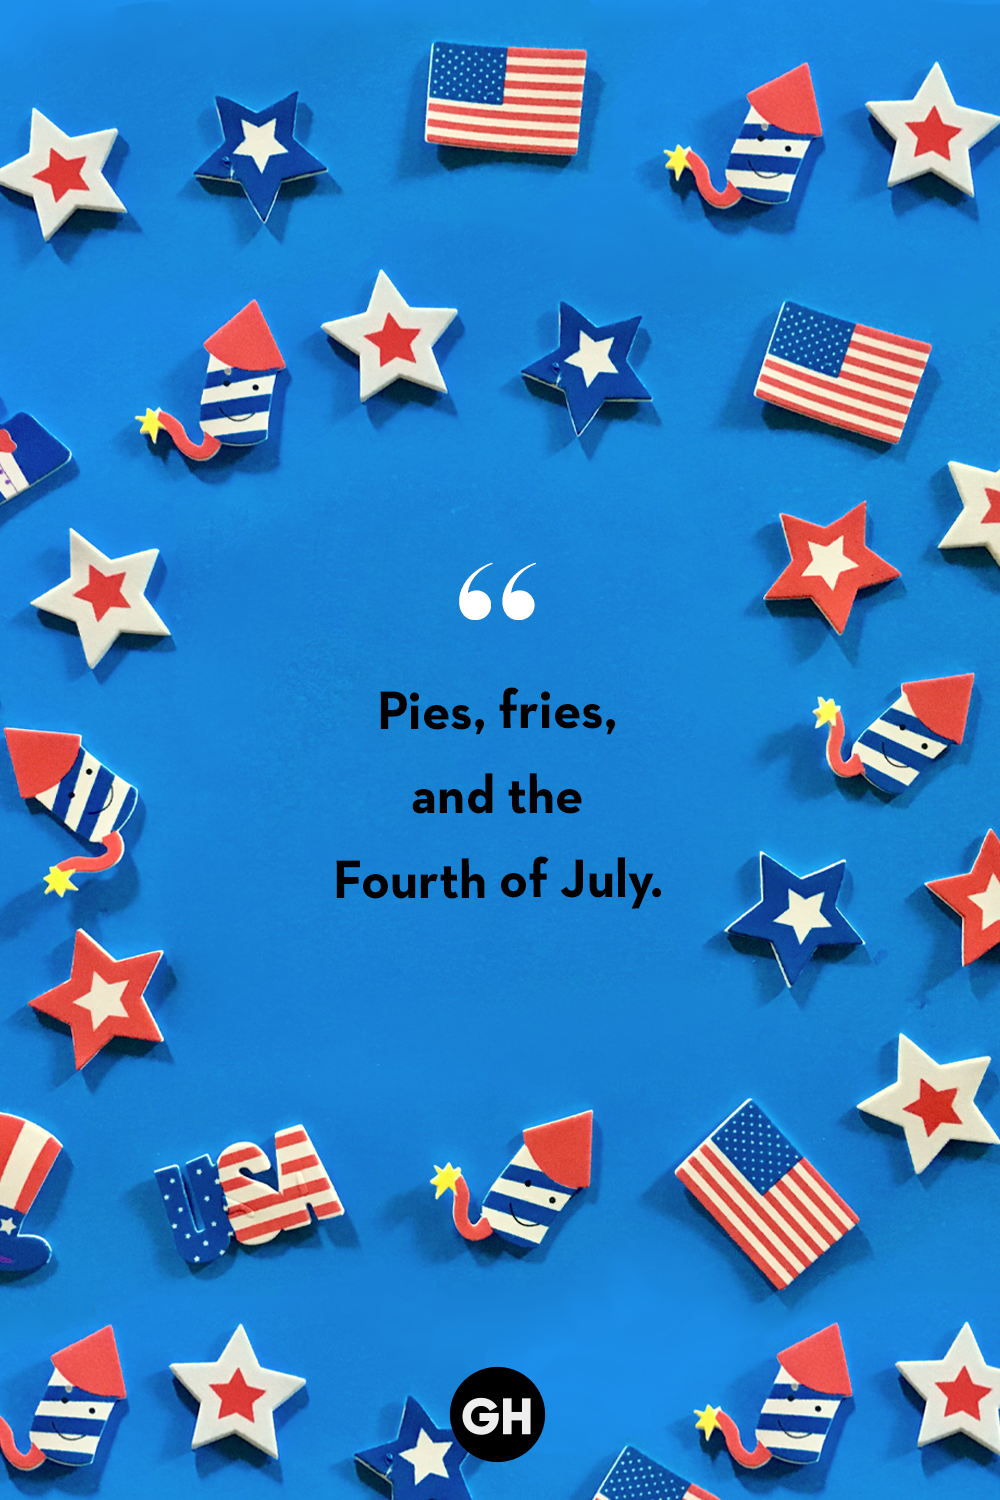 42 Best Patriotic Quotes - Famous 4th of July Patriotic Quotes